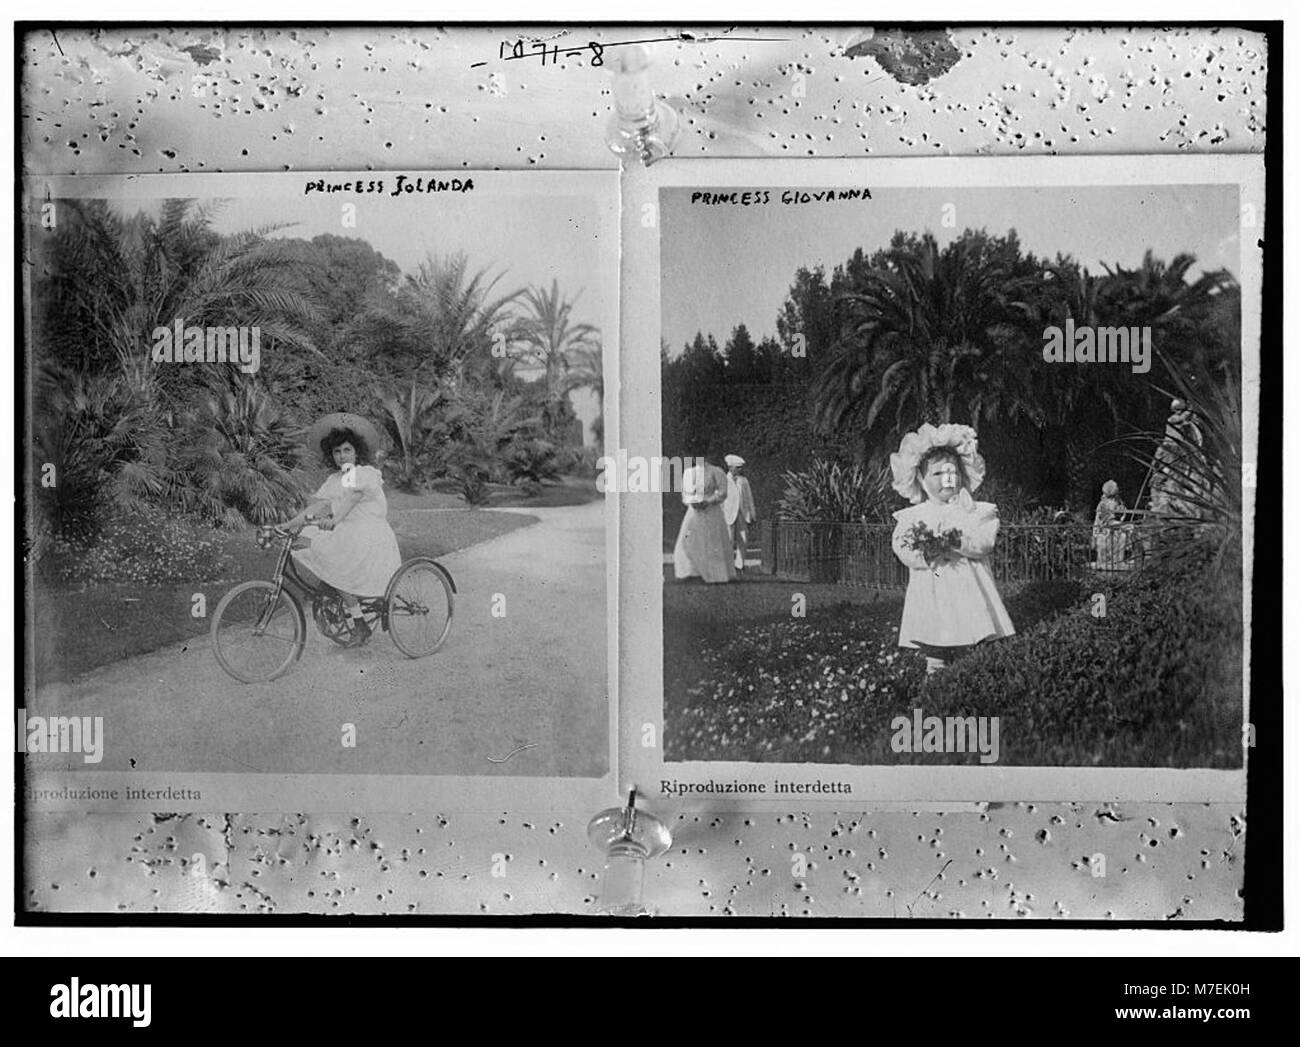 Princess Jolanda on bicycle; Princess Giovanna in garden holding flowers LCCN2014685188 Stock Photo